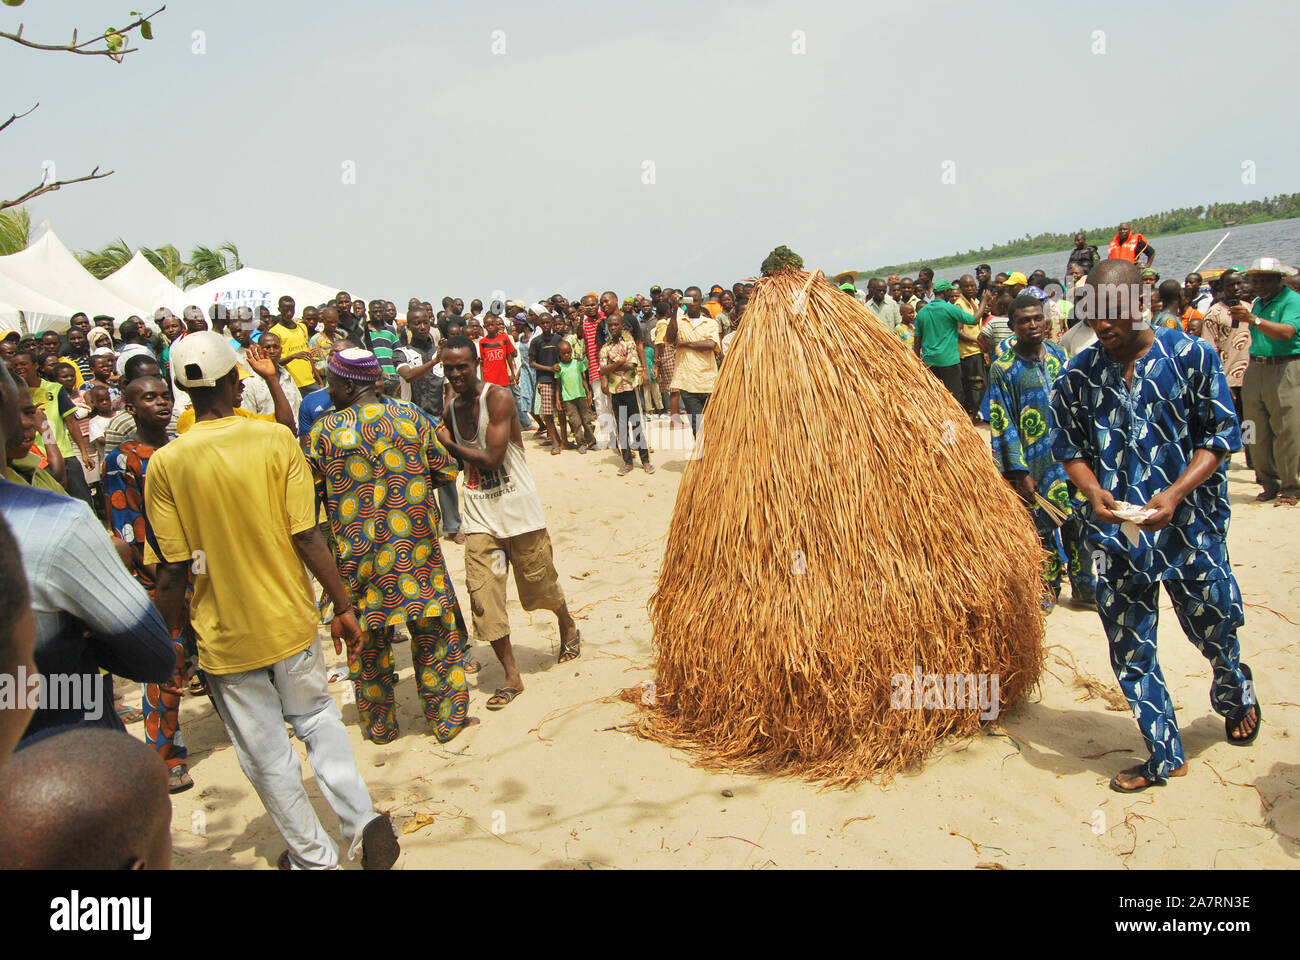 Zangbeto Masquerade dancing at the Annual Black Heritage Festival in Badagry, Lagos Nigeria. Stock Photo